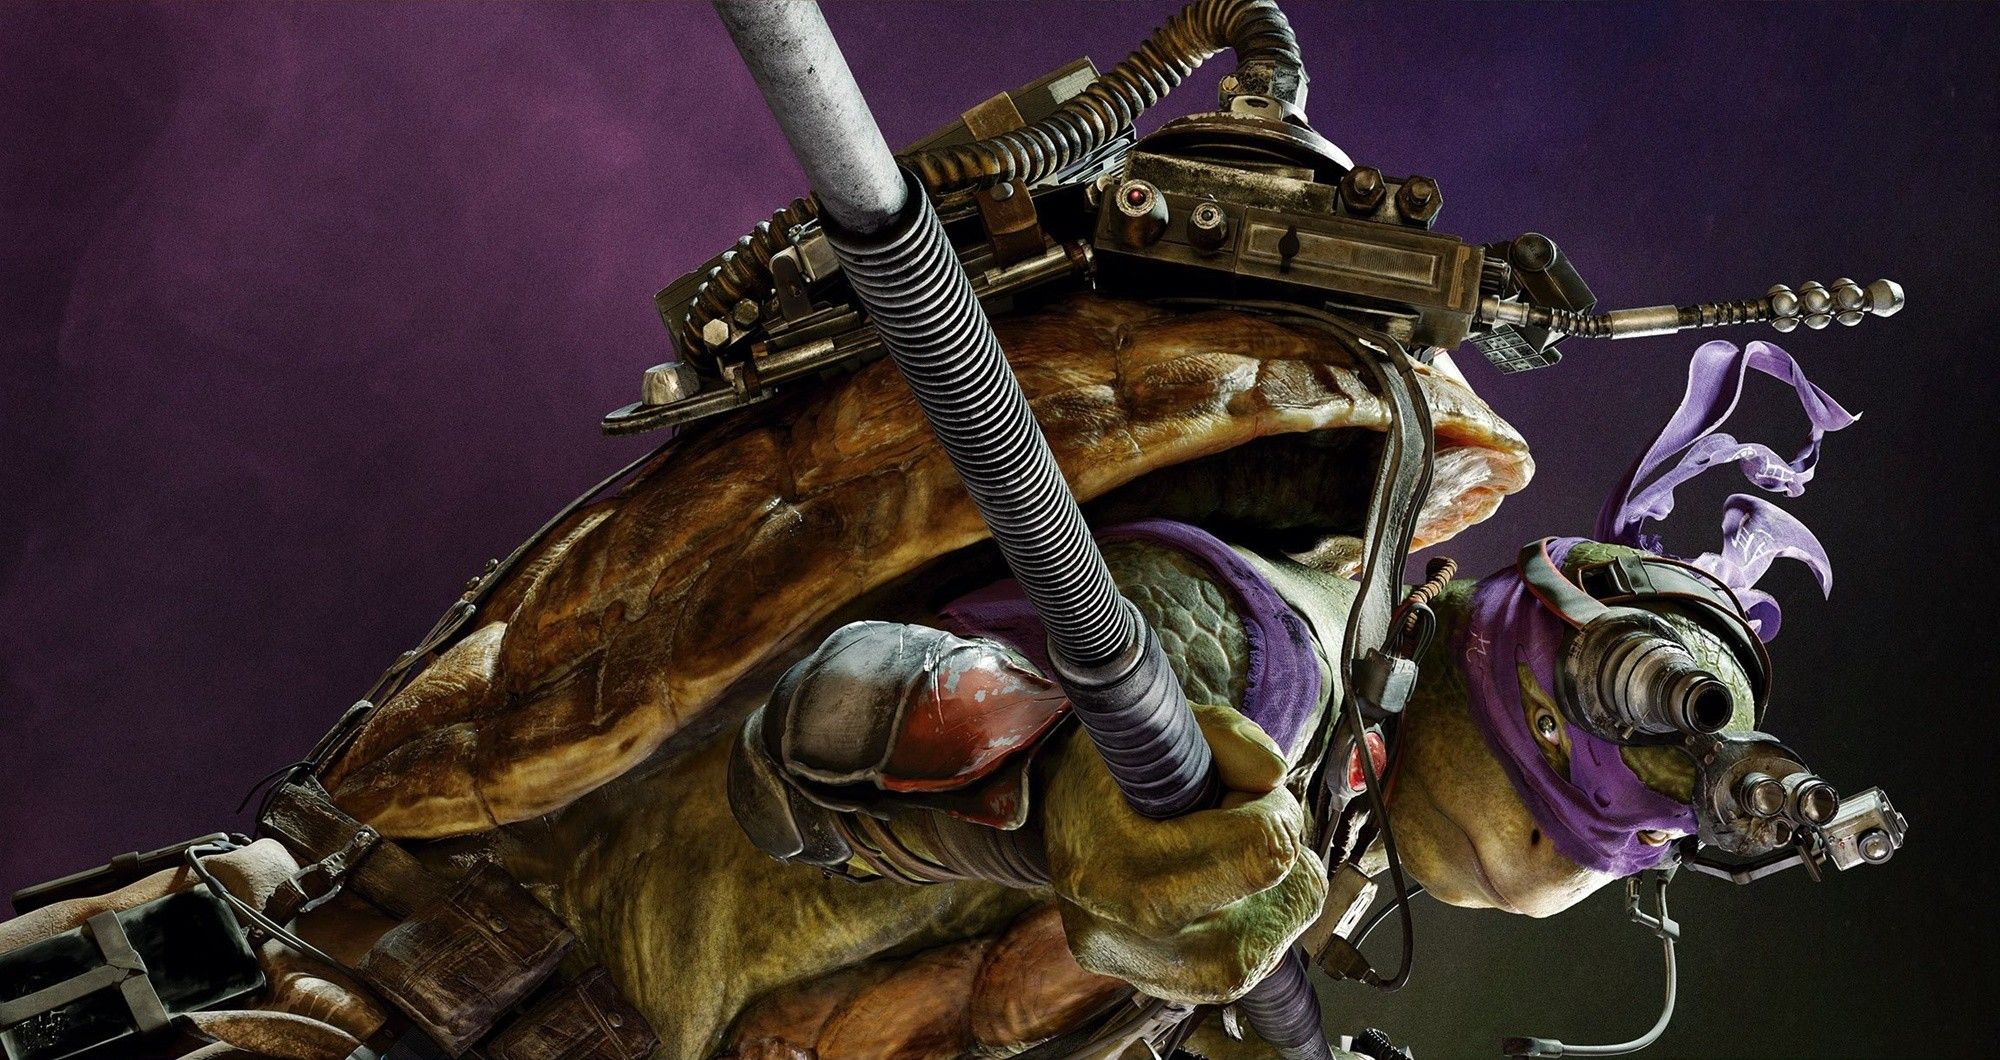 Donatello from Paramount Pictures' Teenage Mutant Ninja Turtles (2014)